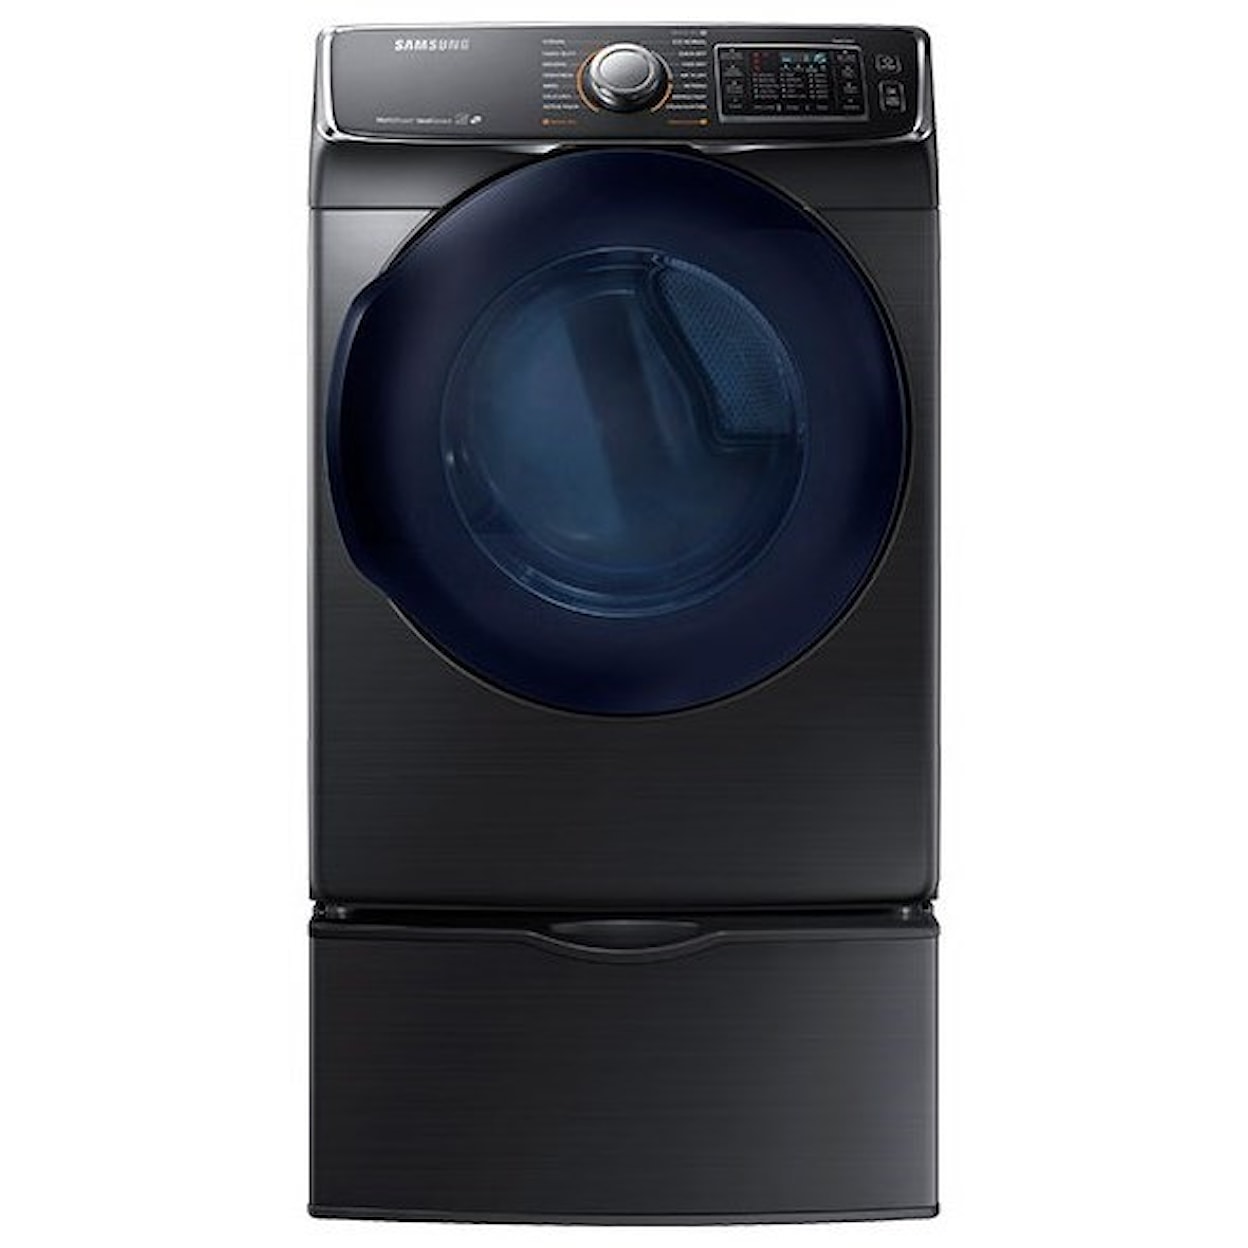 Samsung Appliances Dryers- Samsung DV6500 7.5 cu. ft. Electric Dryer